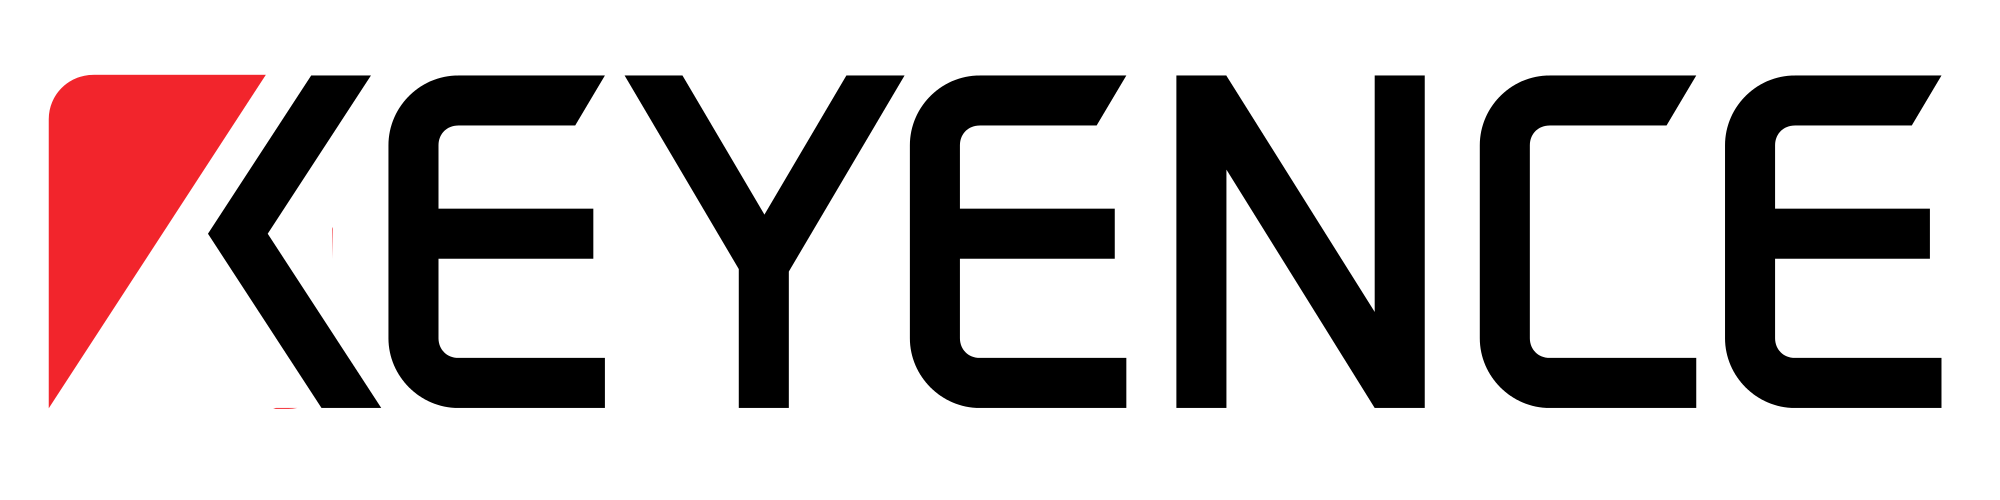 Keyence-Logo.png